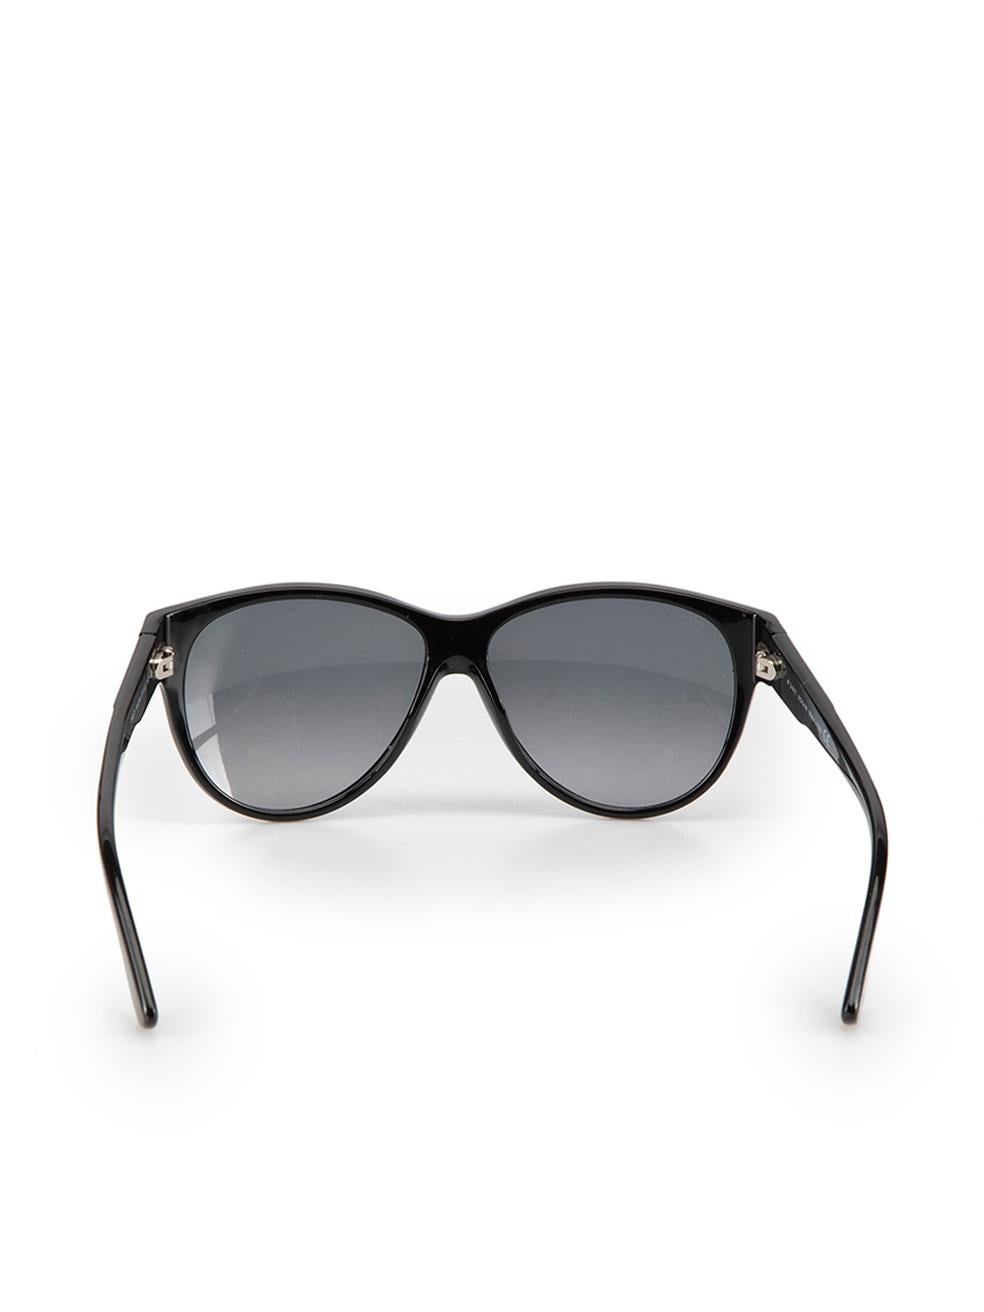 Hogan Women's Black Aviator Grey Lenses Sunglasses In Good Condition For Sale In London, GB